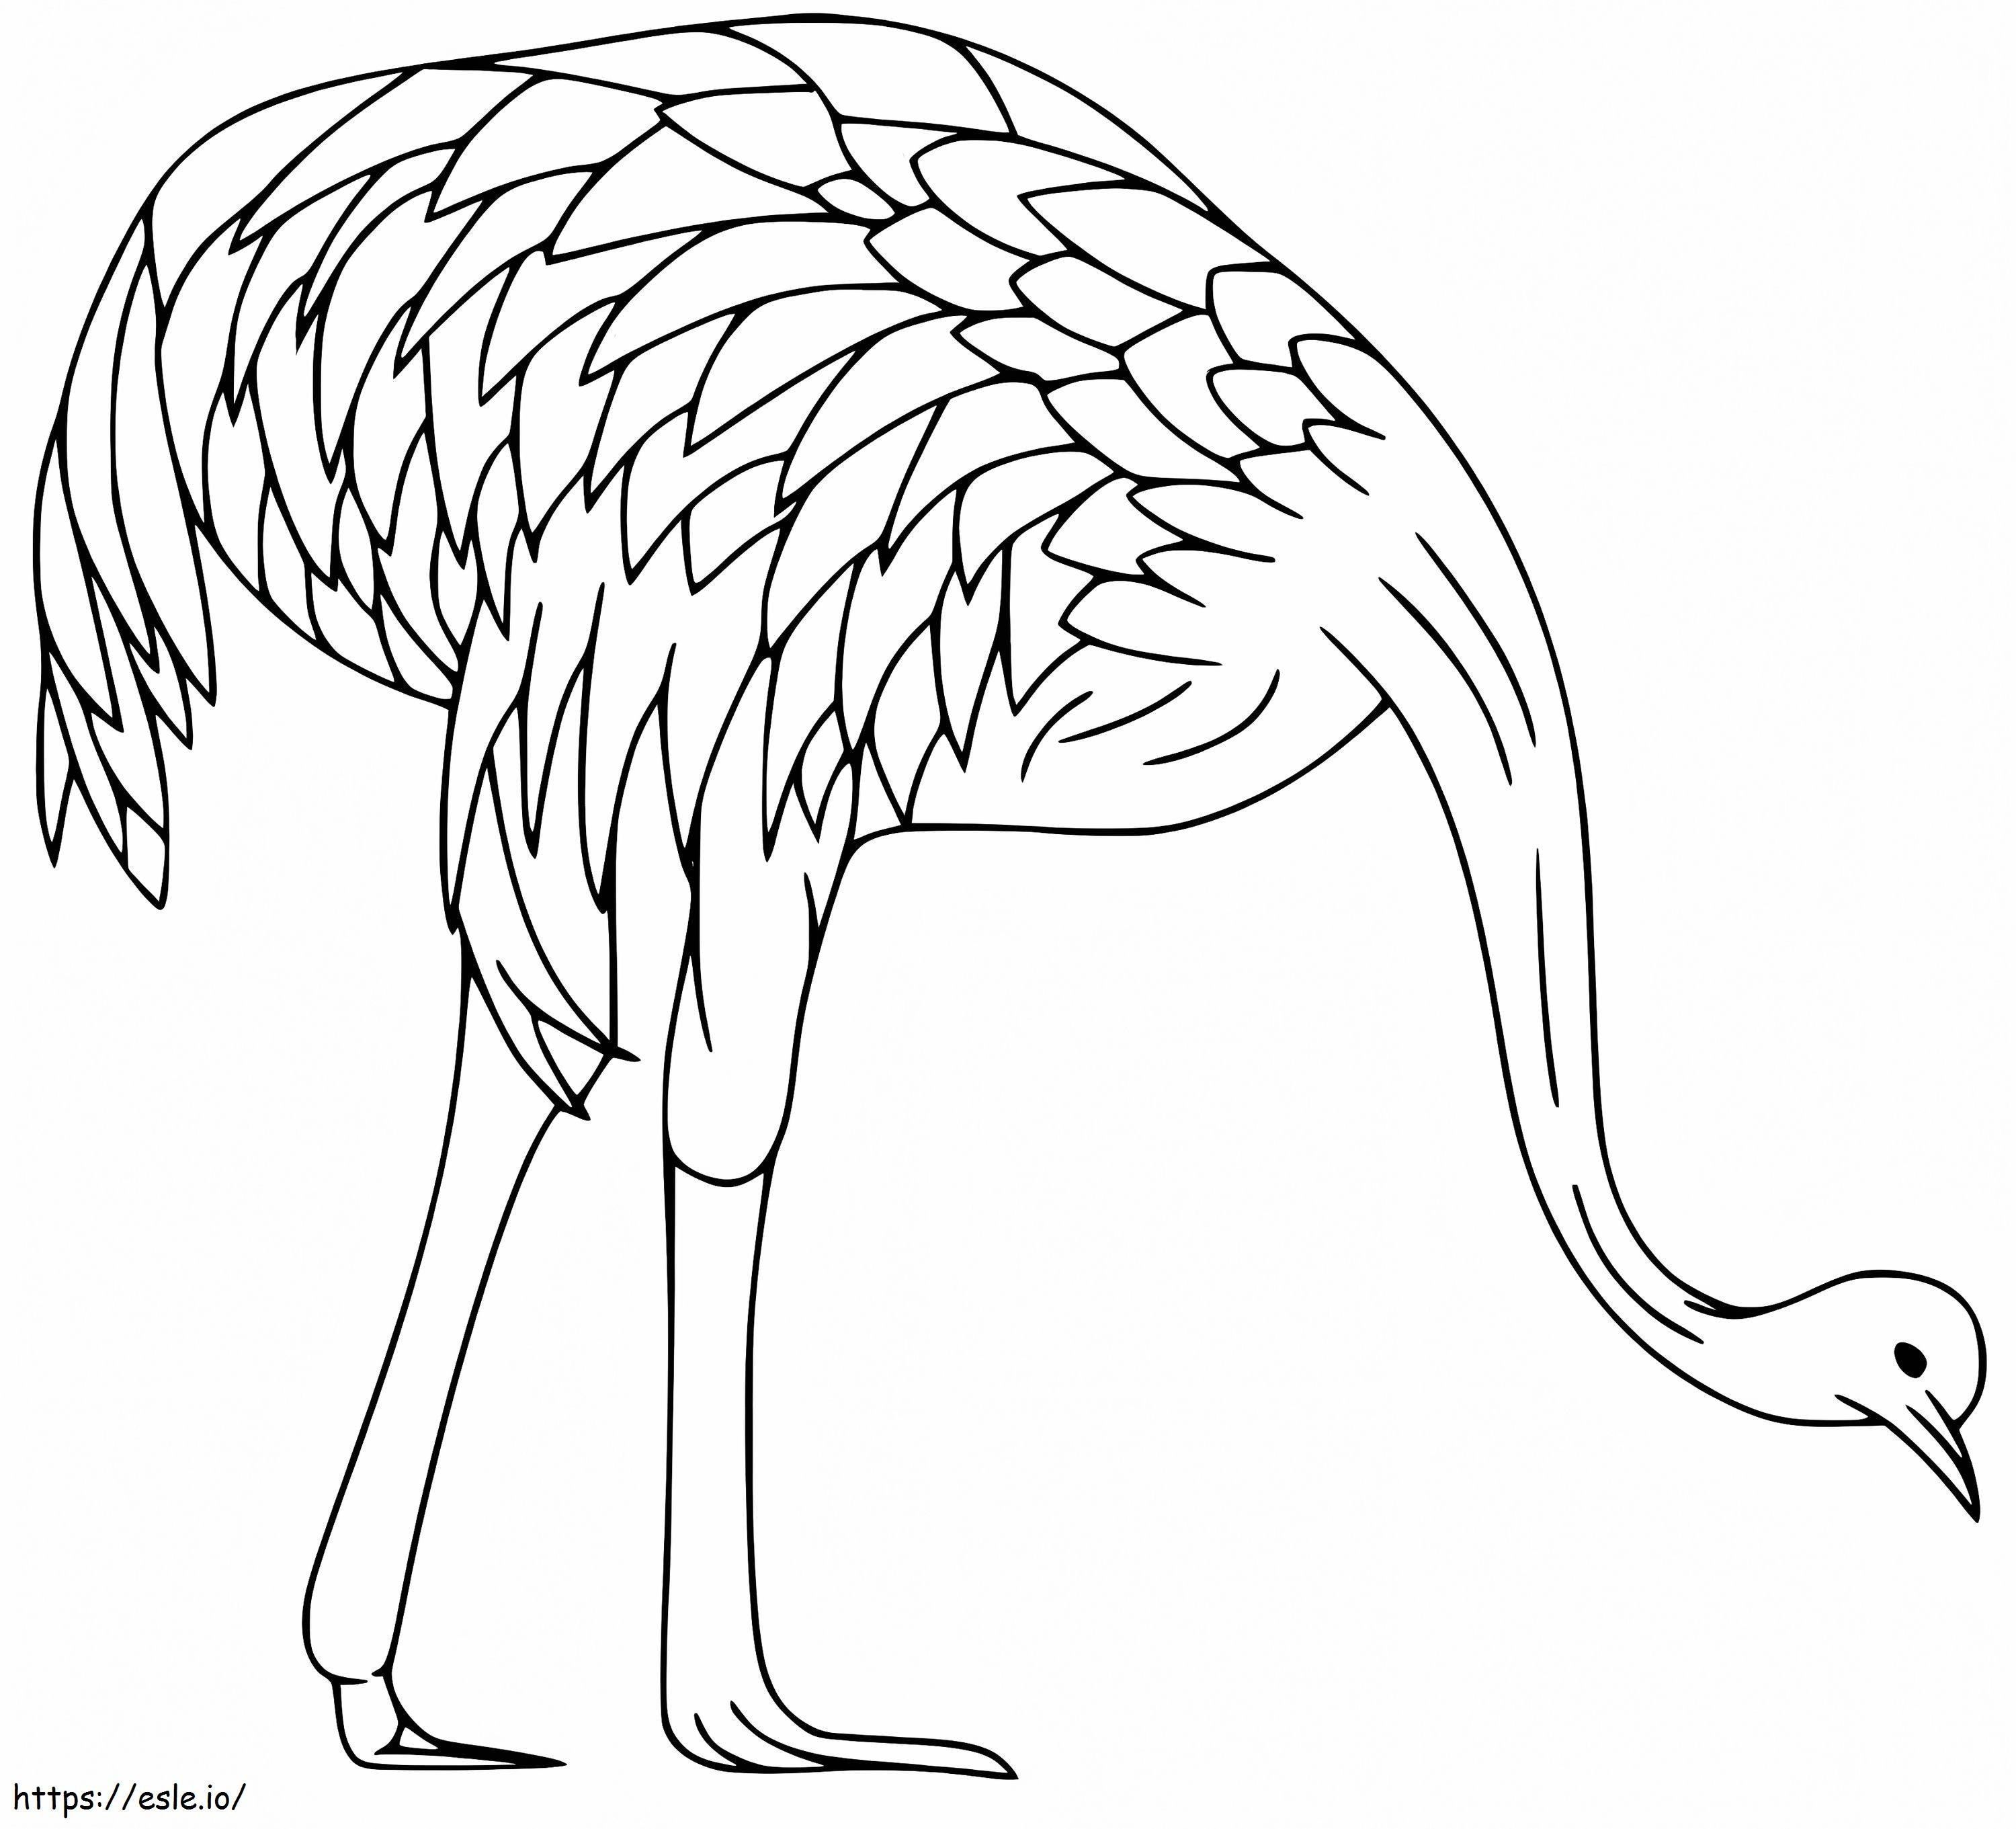 Emu 2 kolorowanka